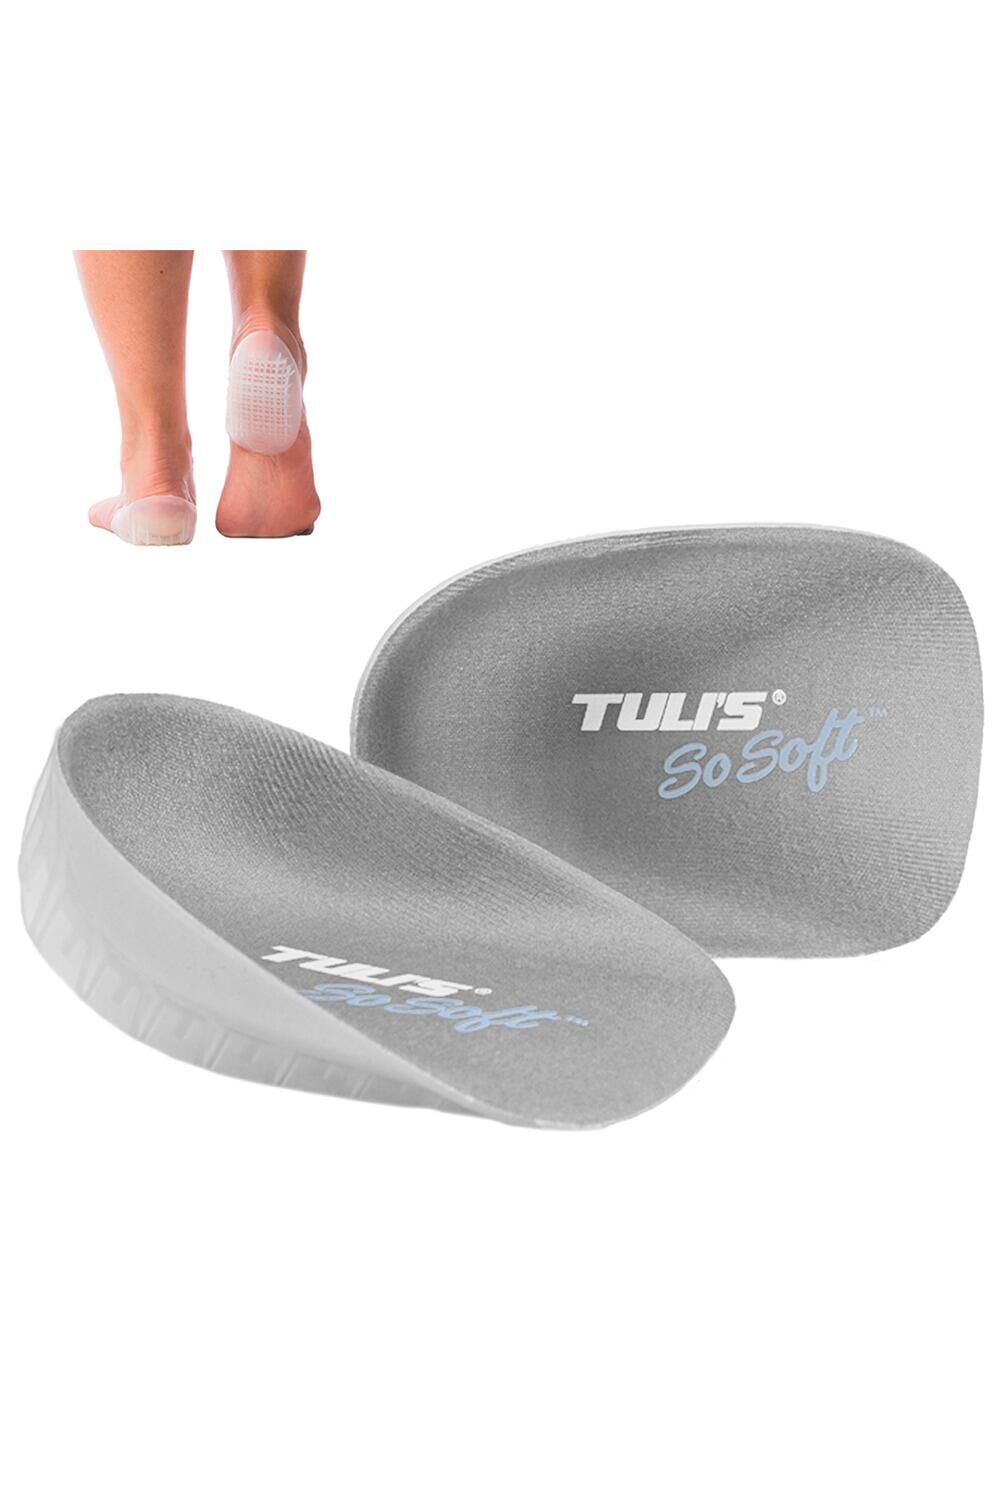 TULI'S So Soft Heel Cups